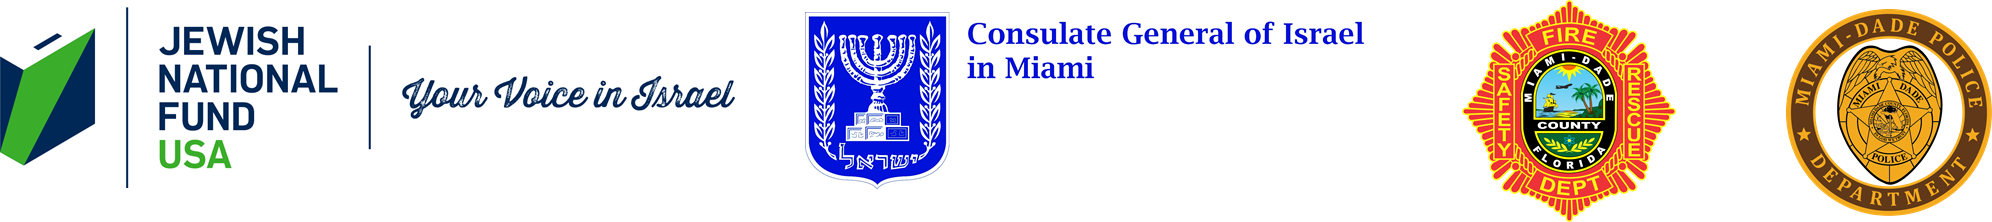 9-11 Miami Partner organizations